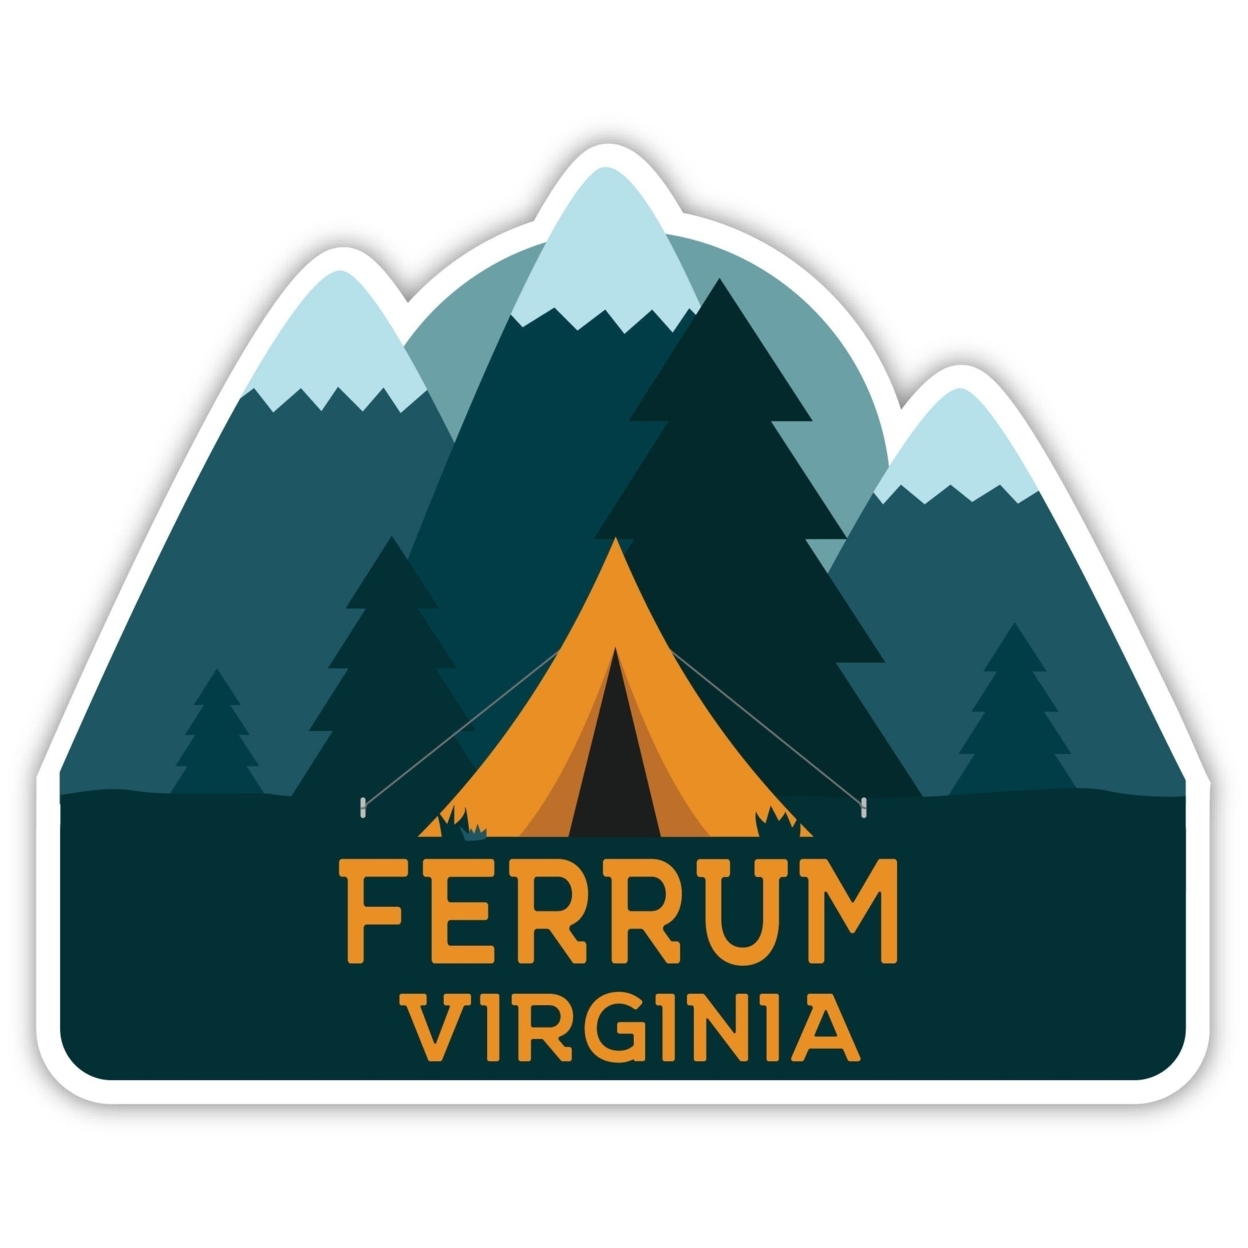 Ferrum Virginia Souvenir Decorative Stickers (Choose Theme And Size) - 4-Pack, 4-Inch, Tent